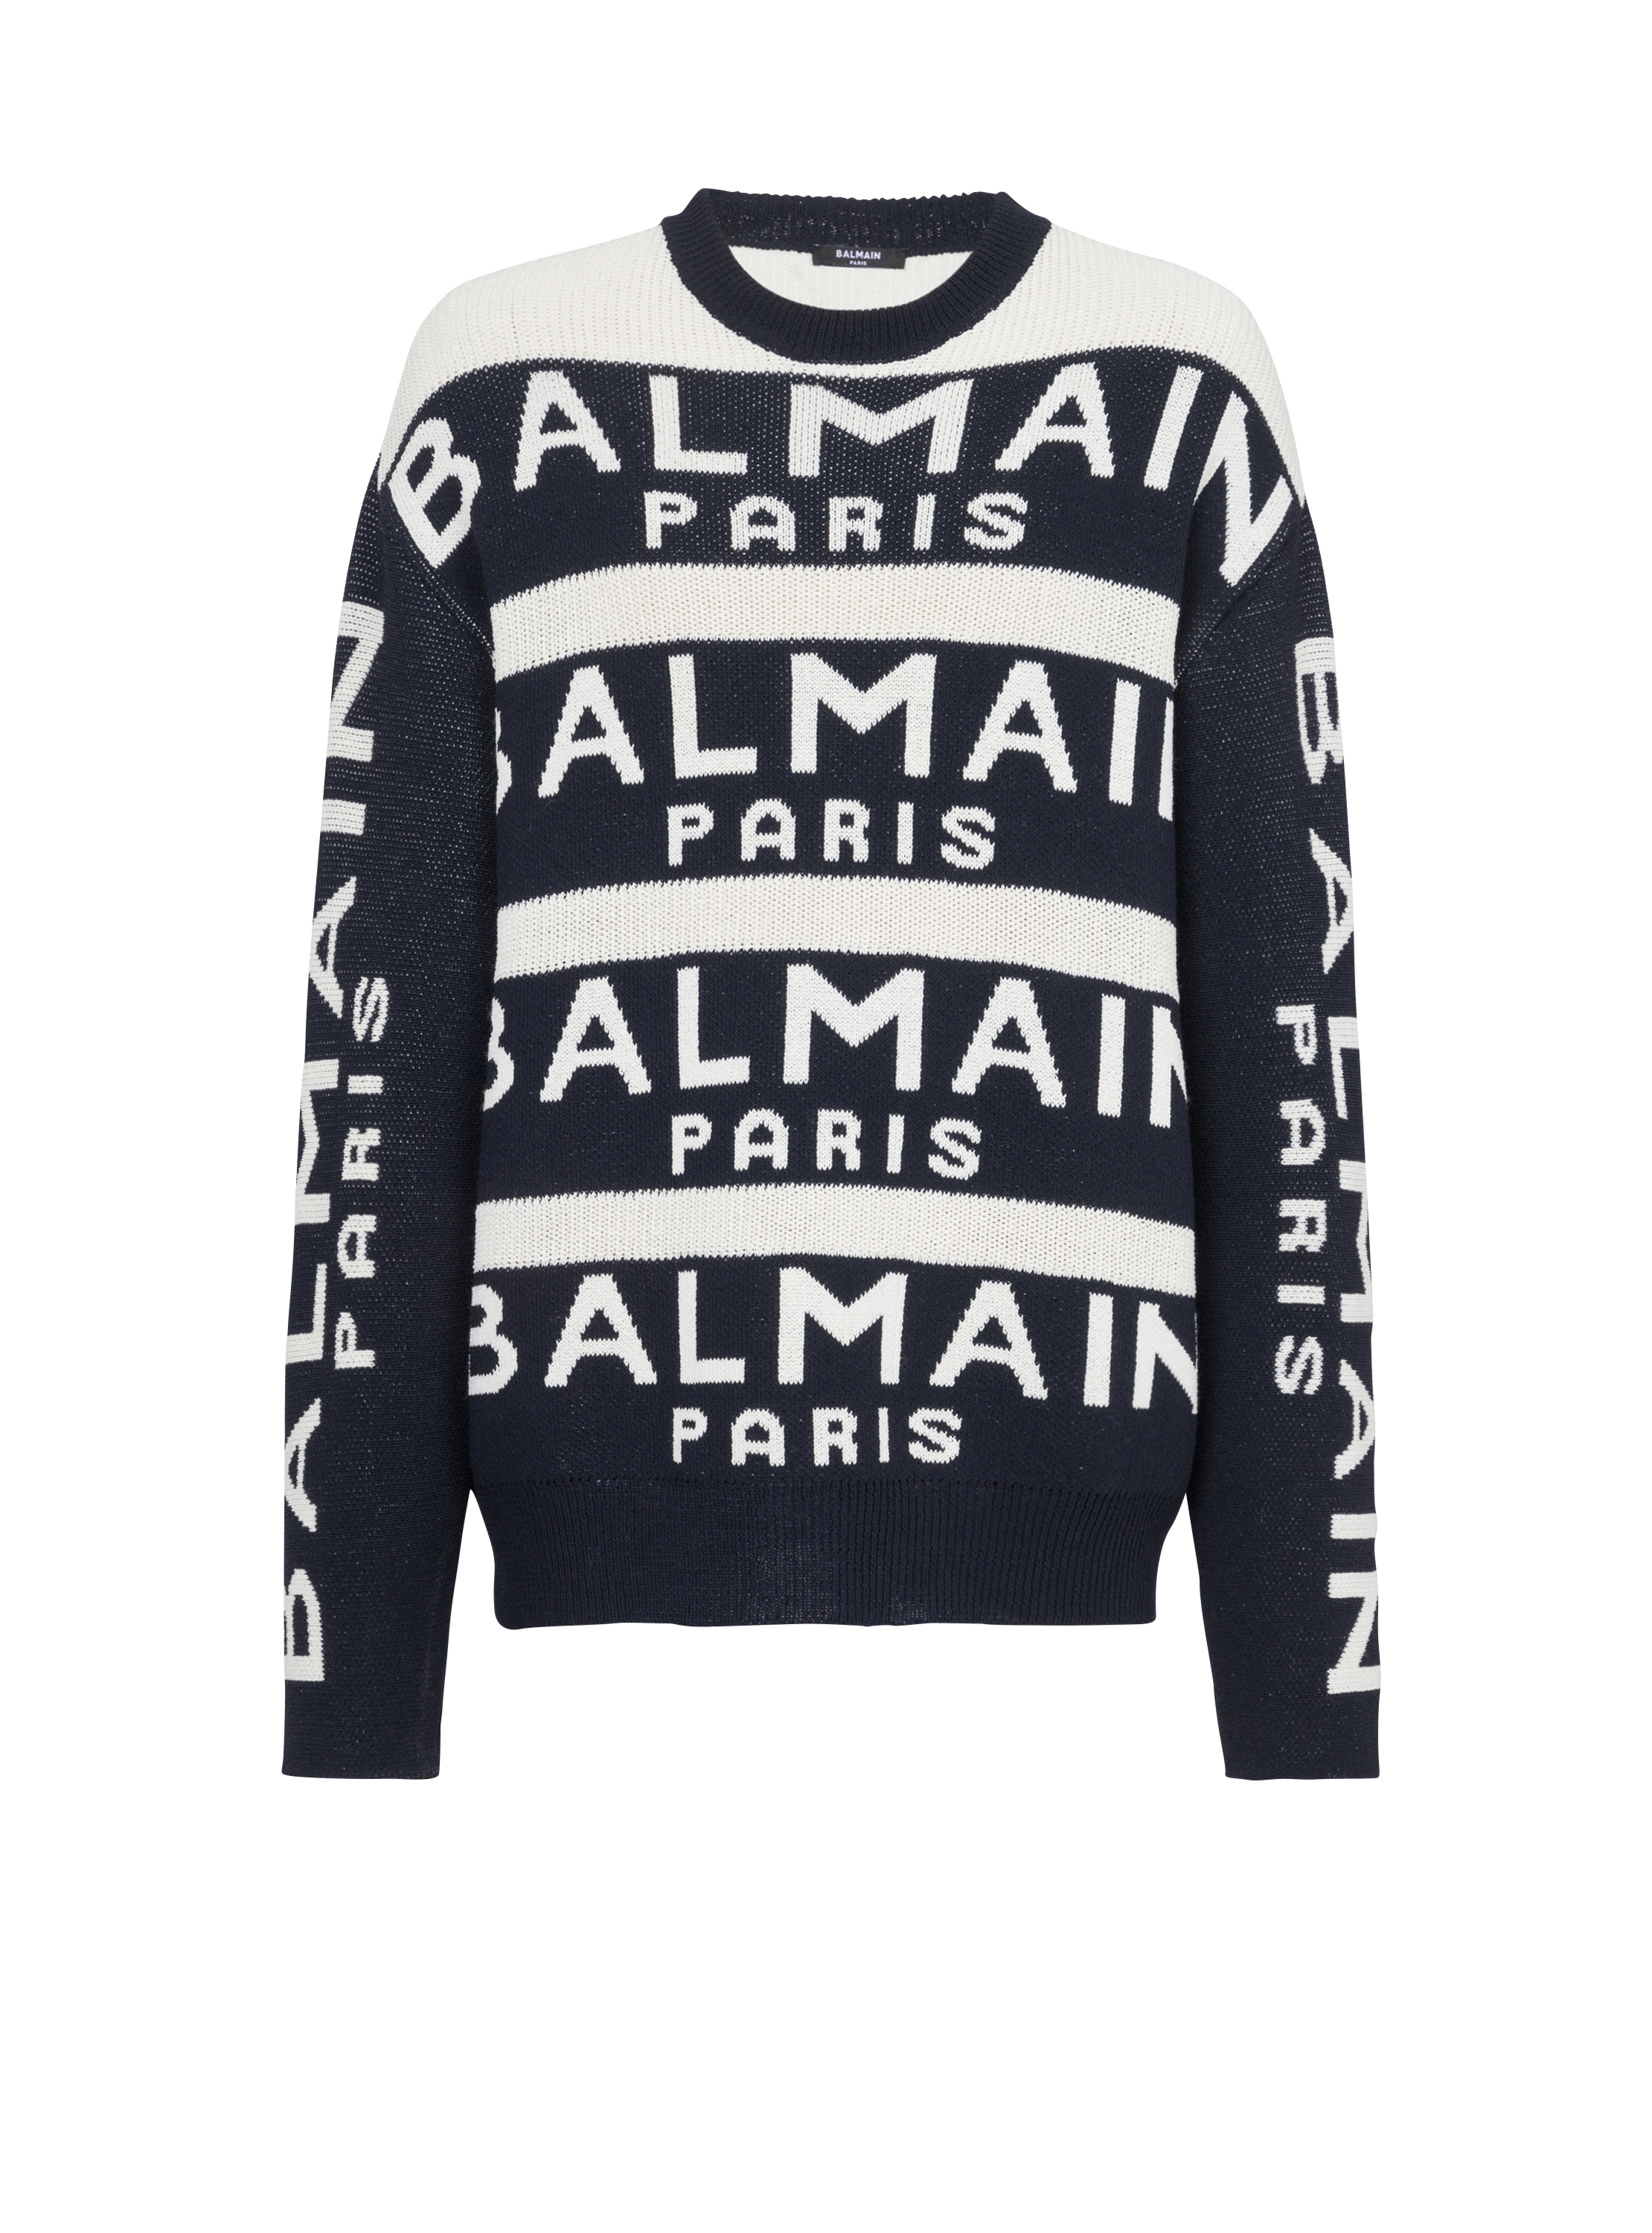 Balmain Paris 로고 자수 디테일 스웨터, black, hi-res